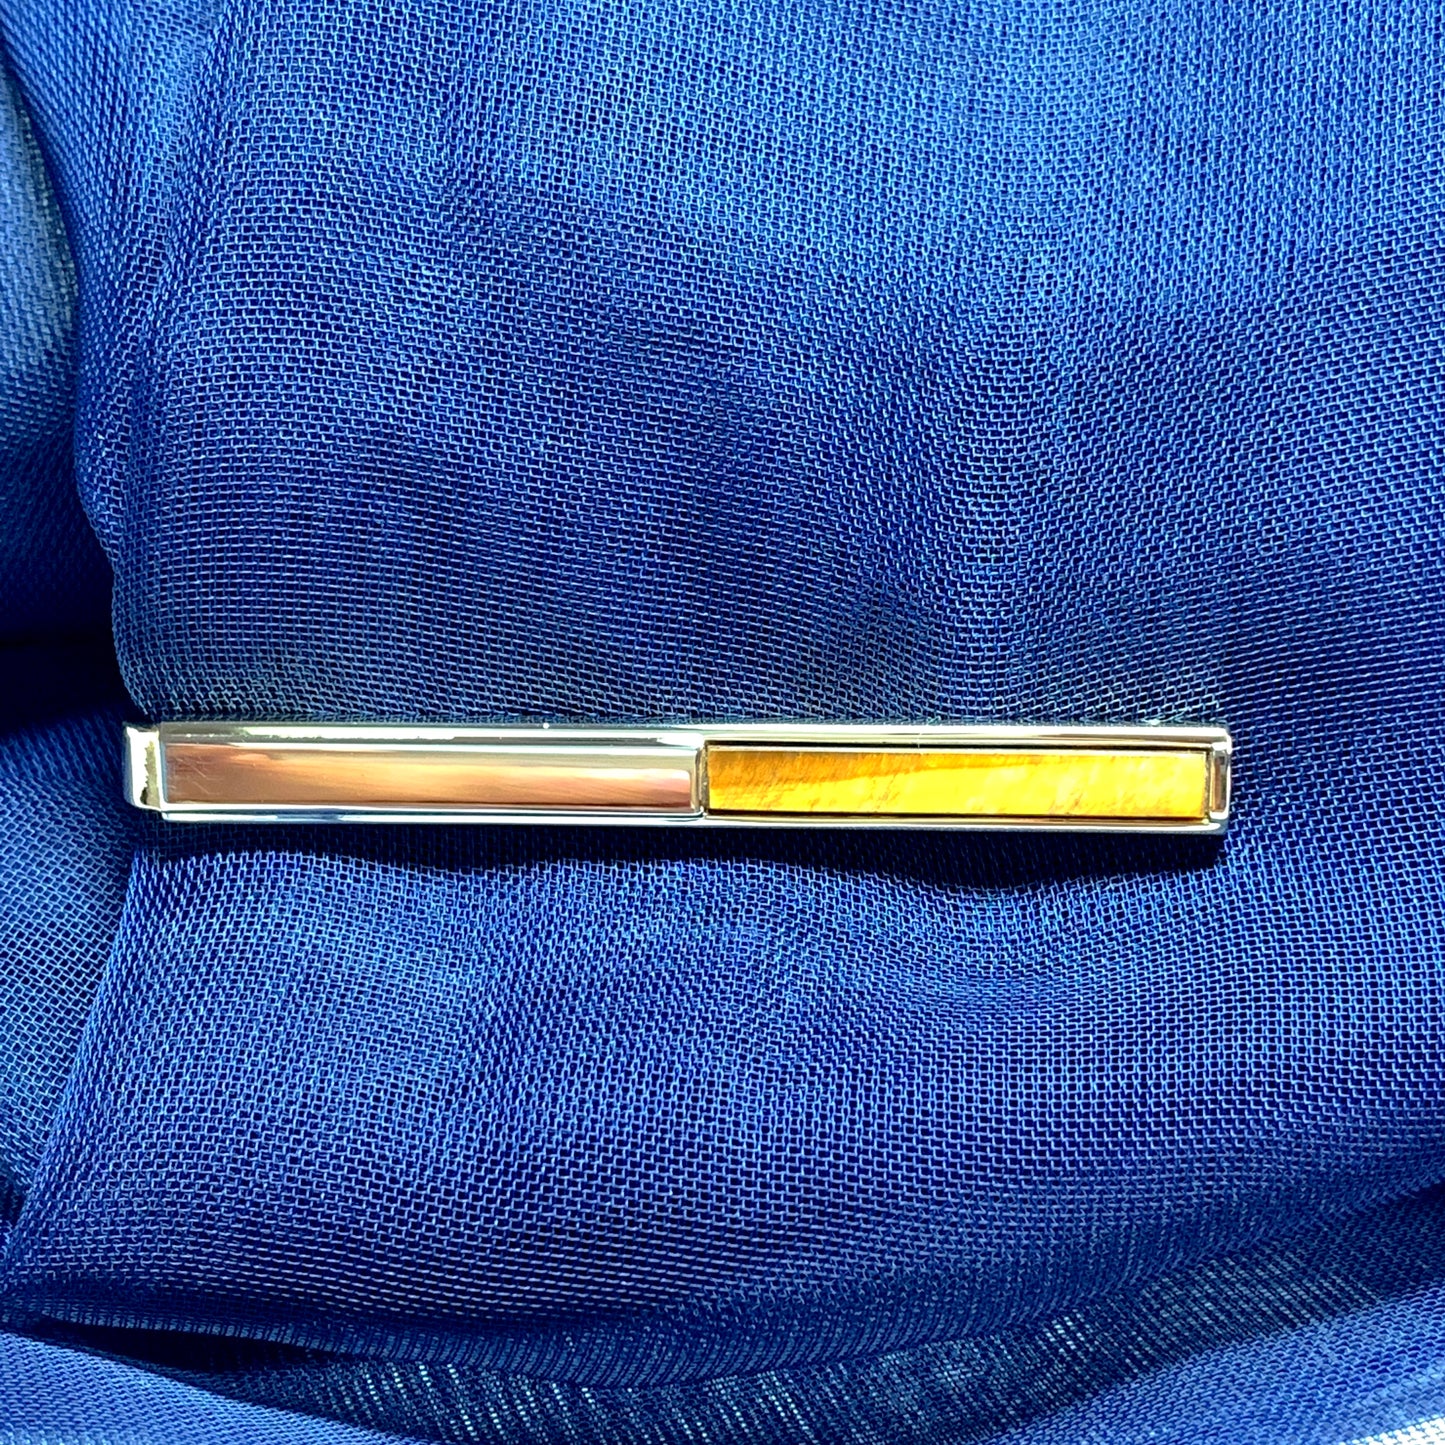 Tiger Eye gold plated tie bar clip slide